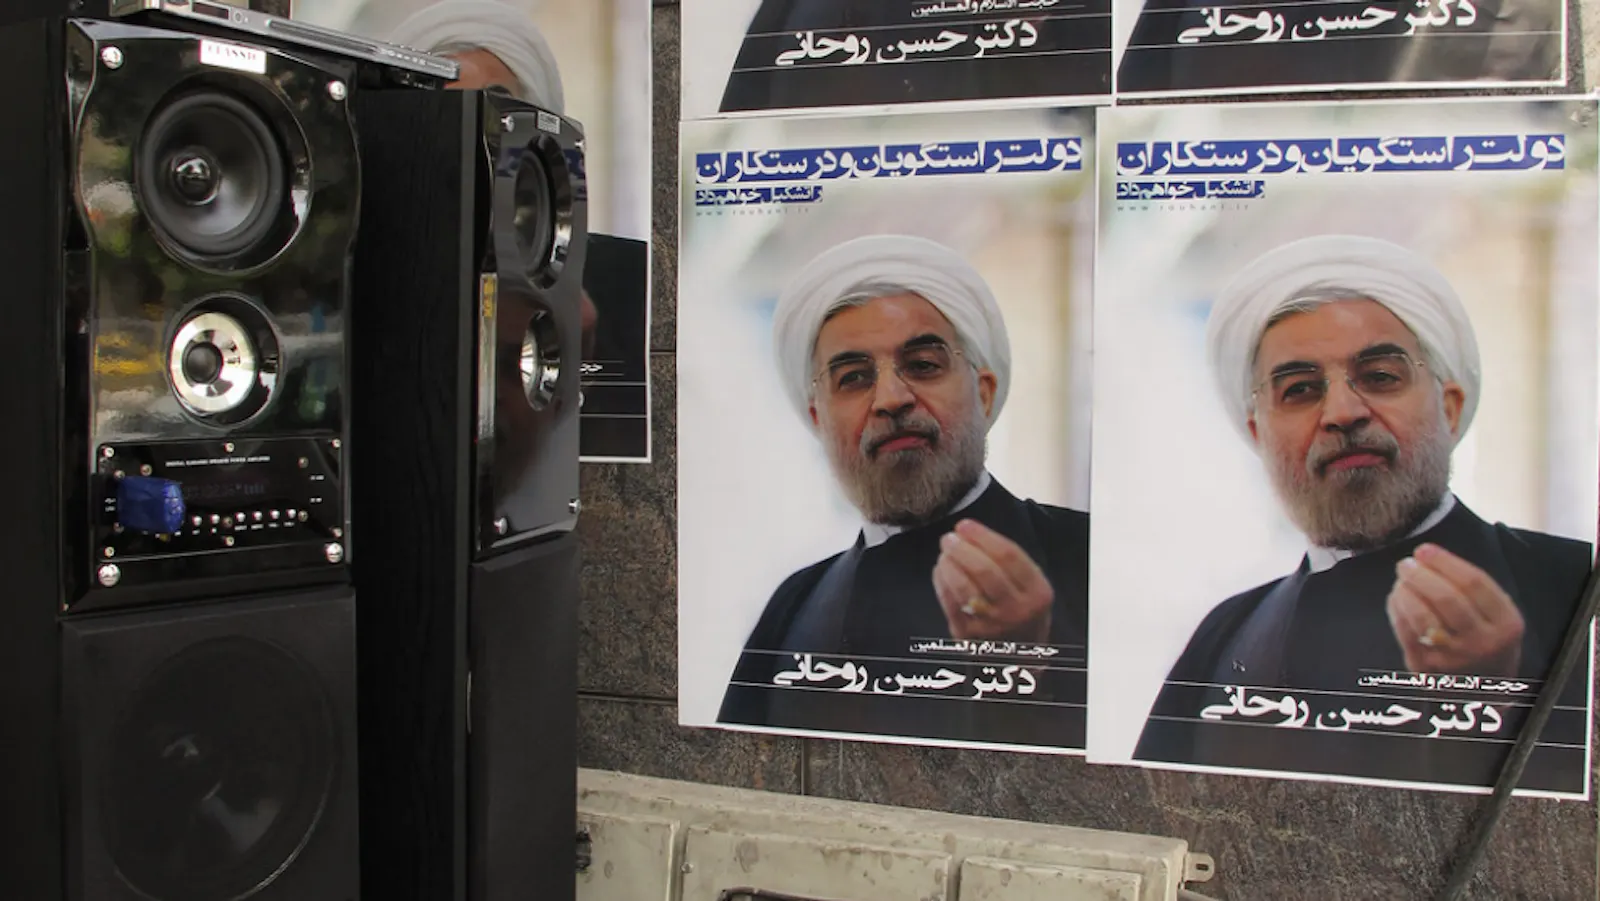 Lautsprecher neben Wahlplakaten im Iran